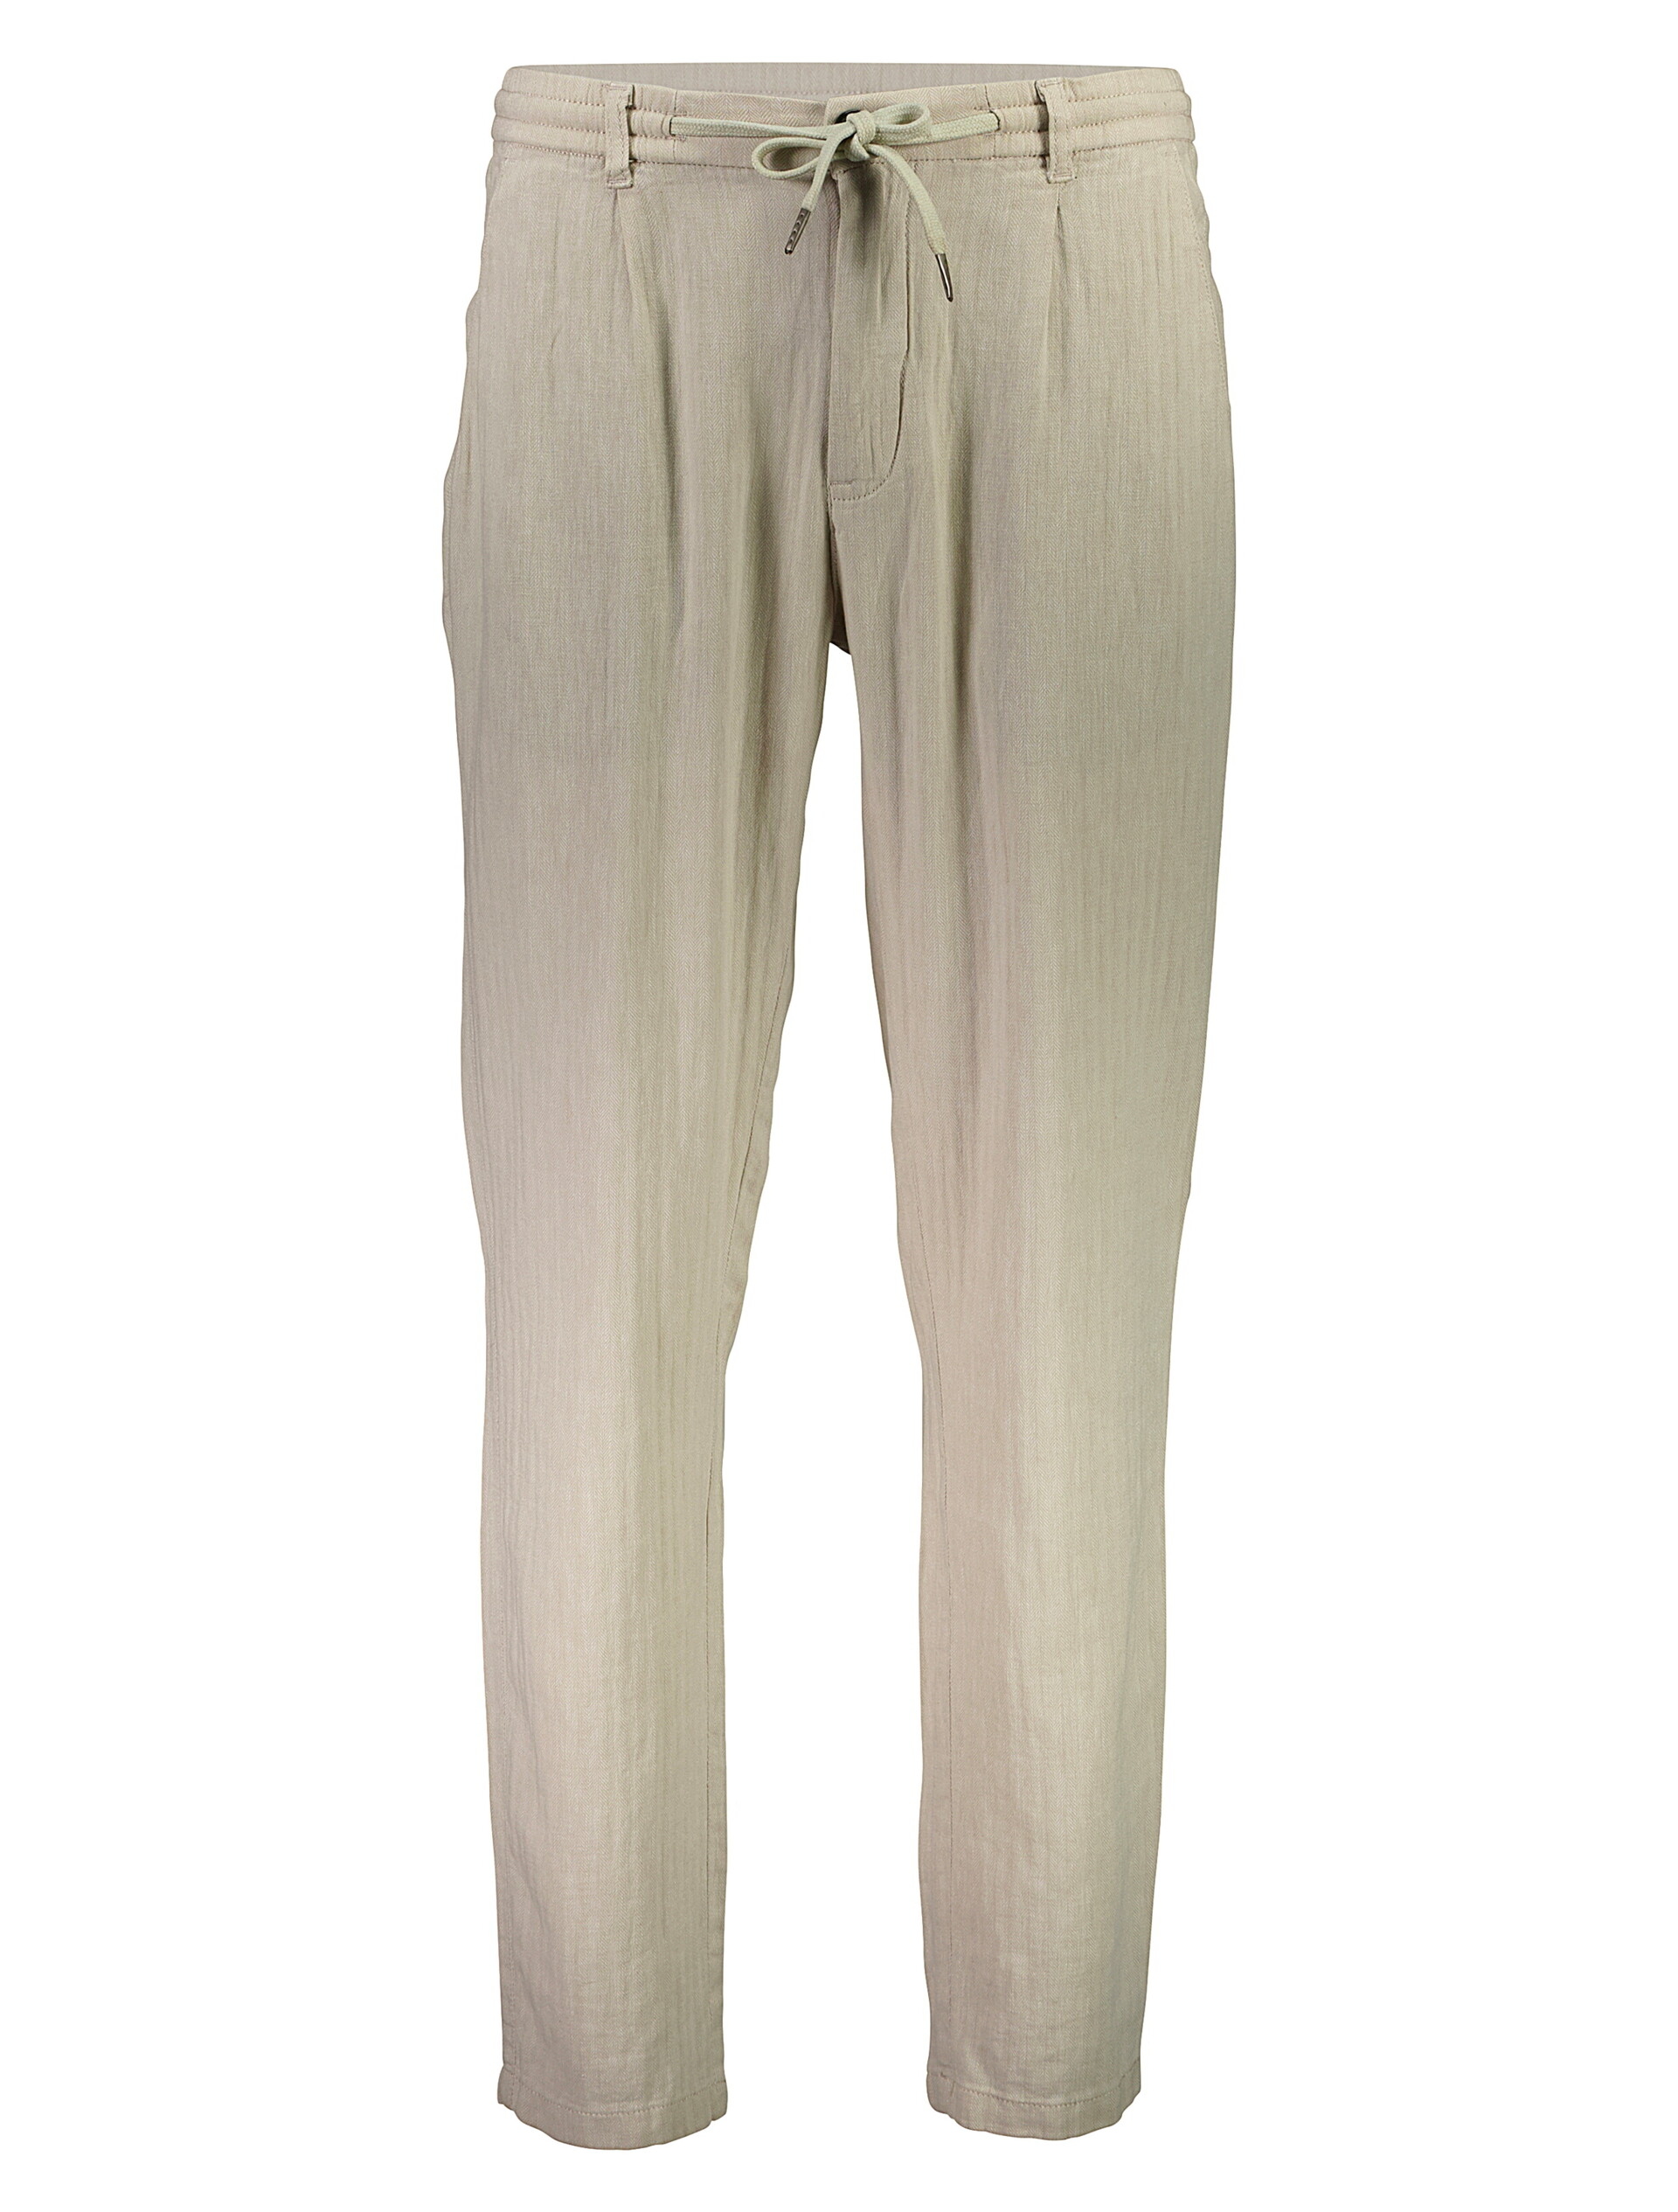 Lindbergh Linen pants grey / lt stone